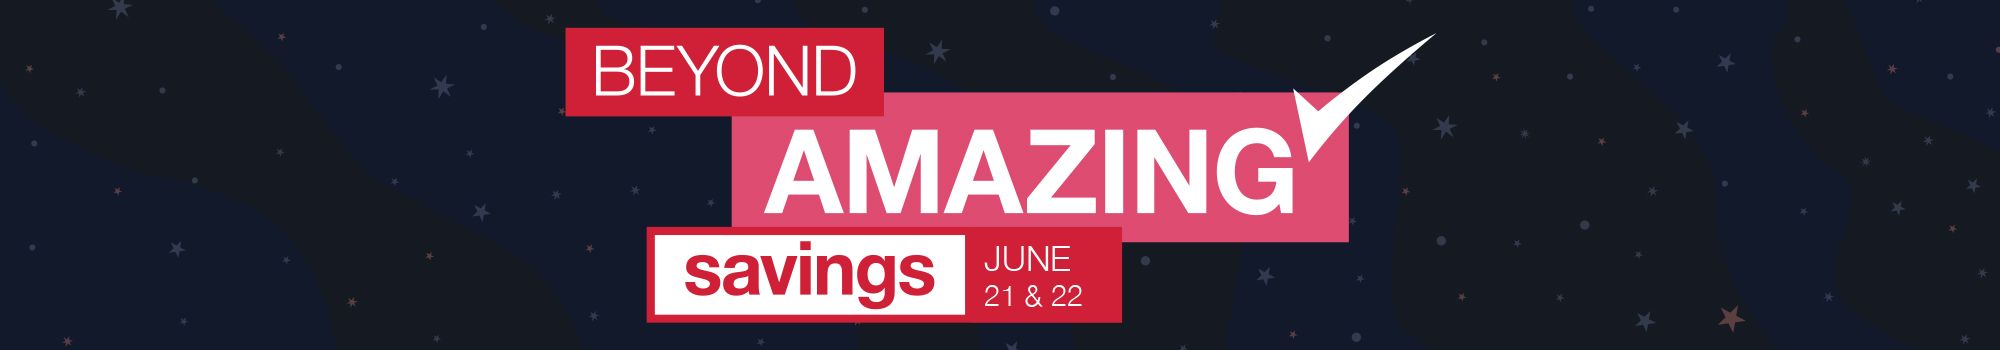 Beyond Amazing Savings June 21st and 22nd.